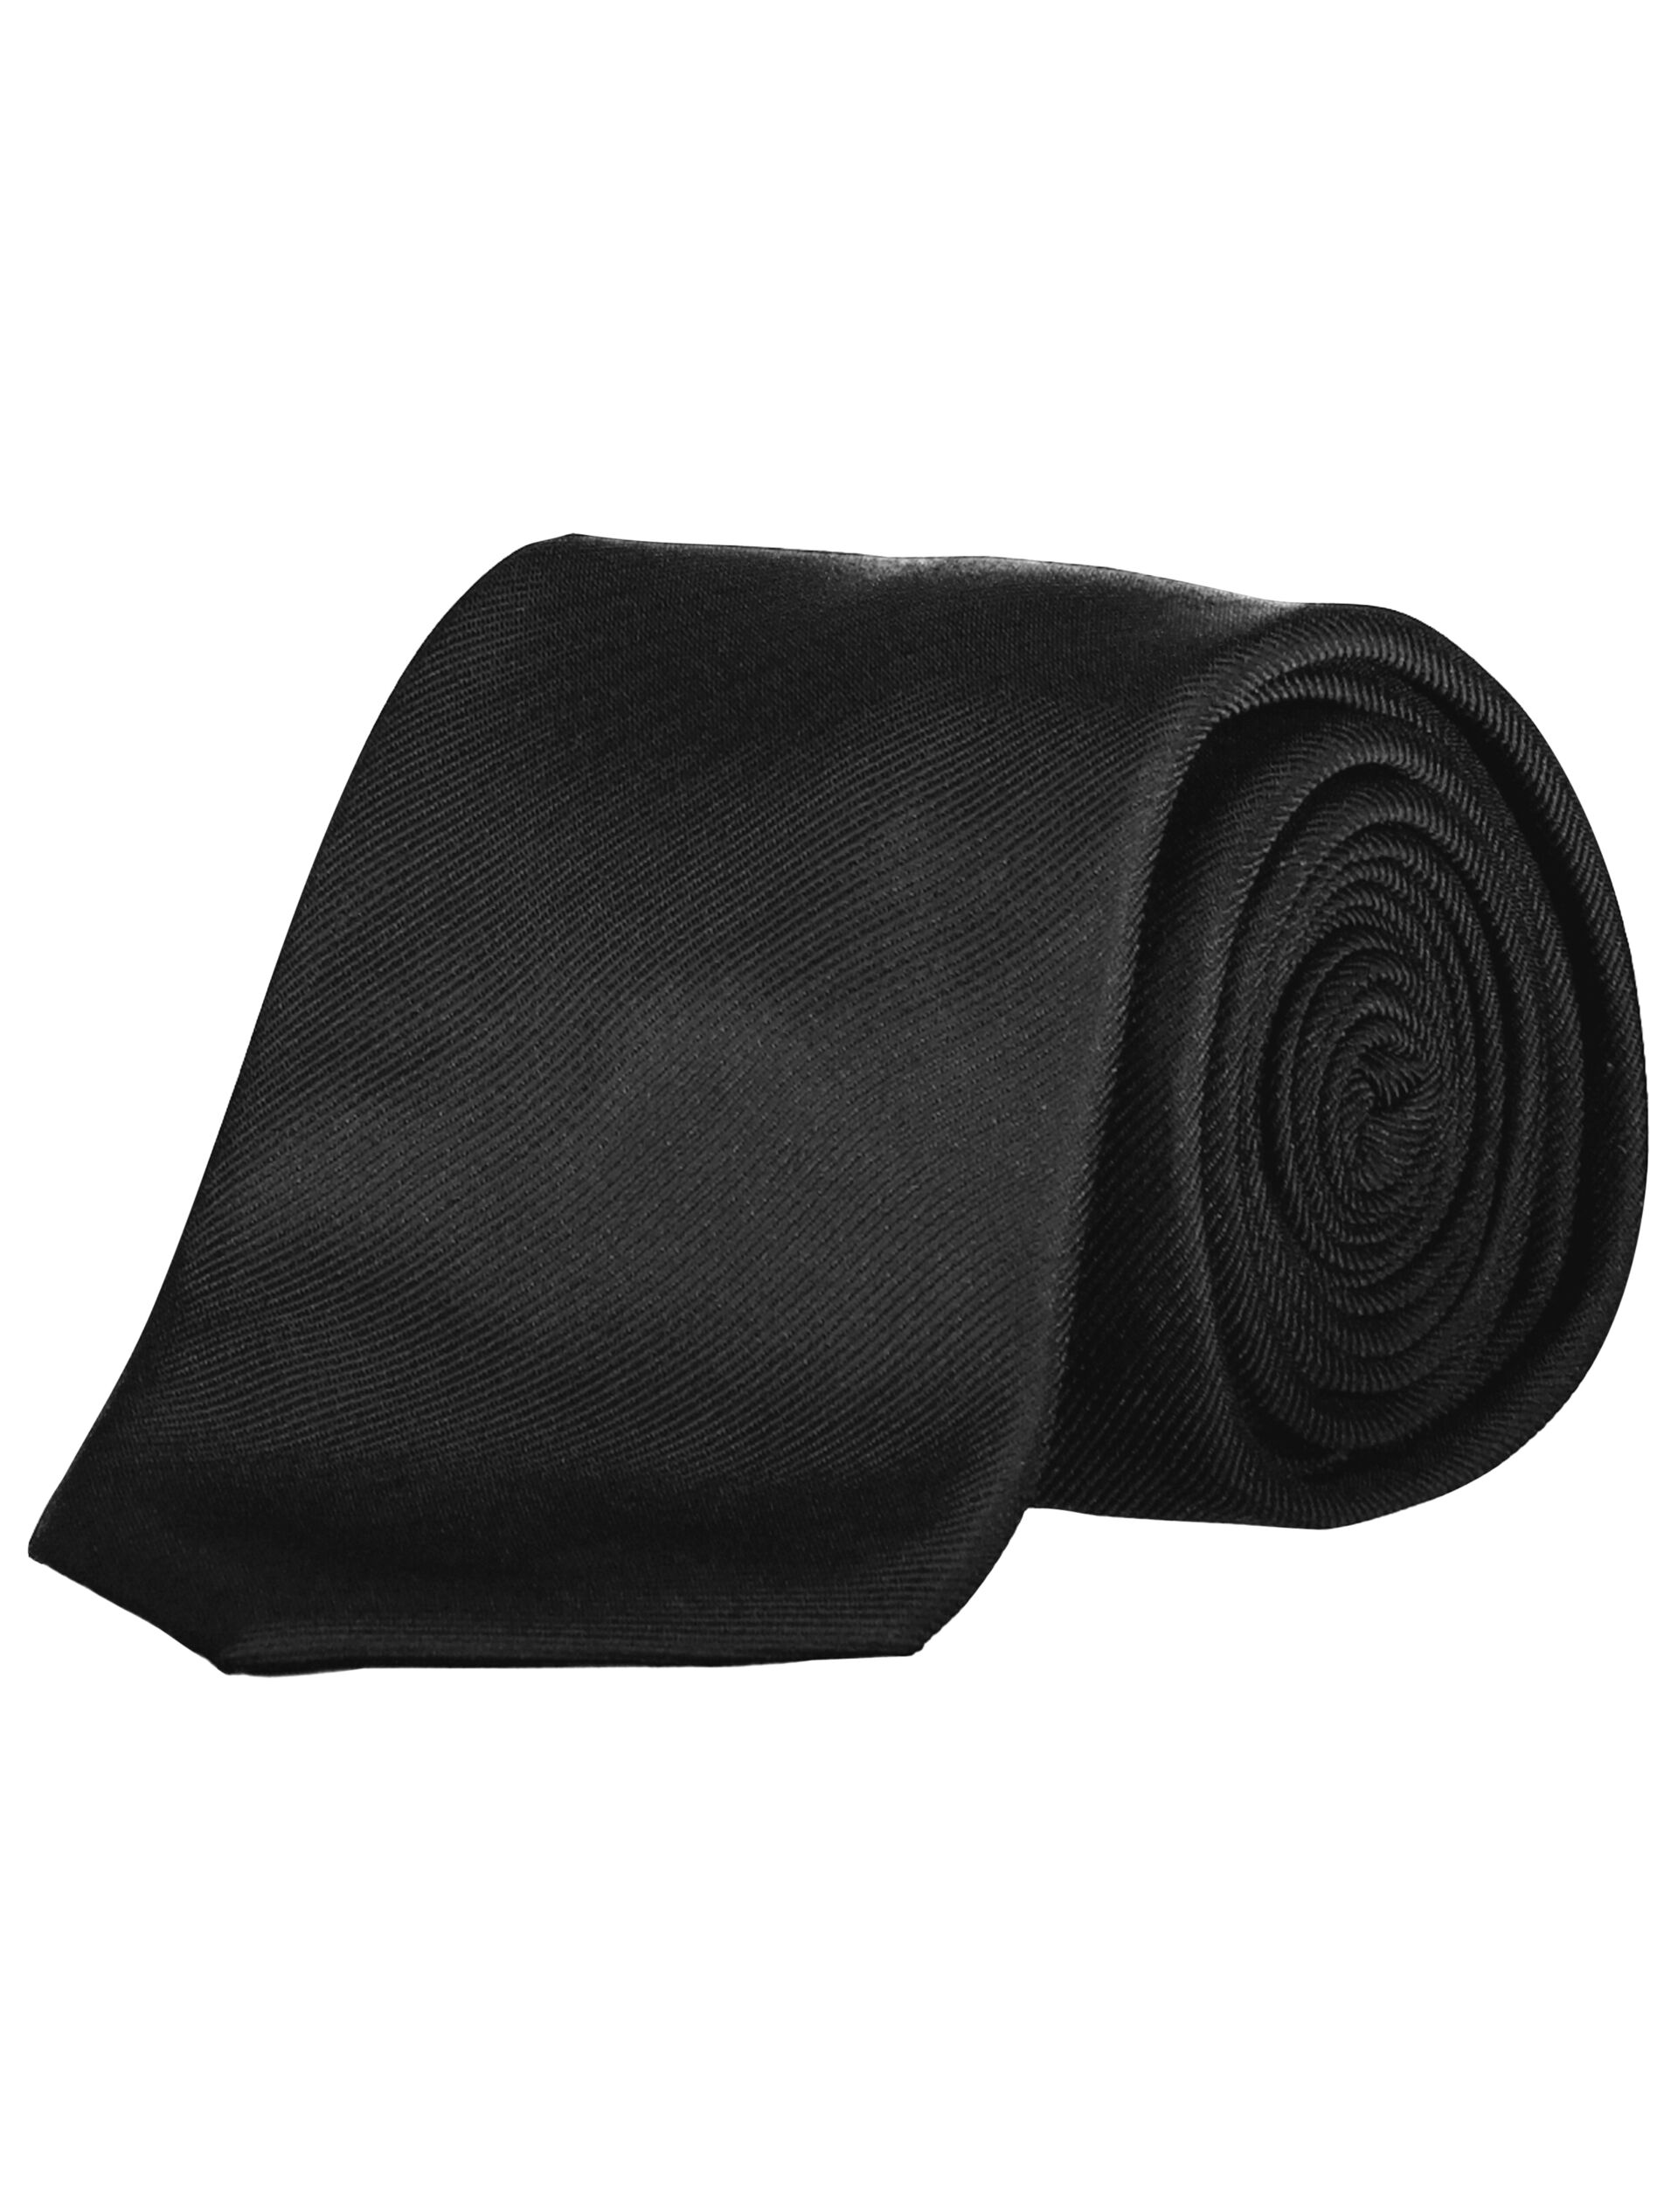 Tie Tie Black 30-972001